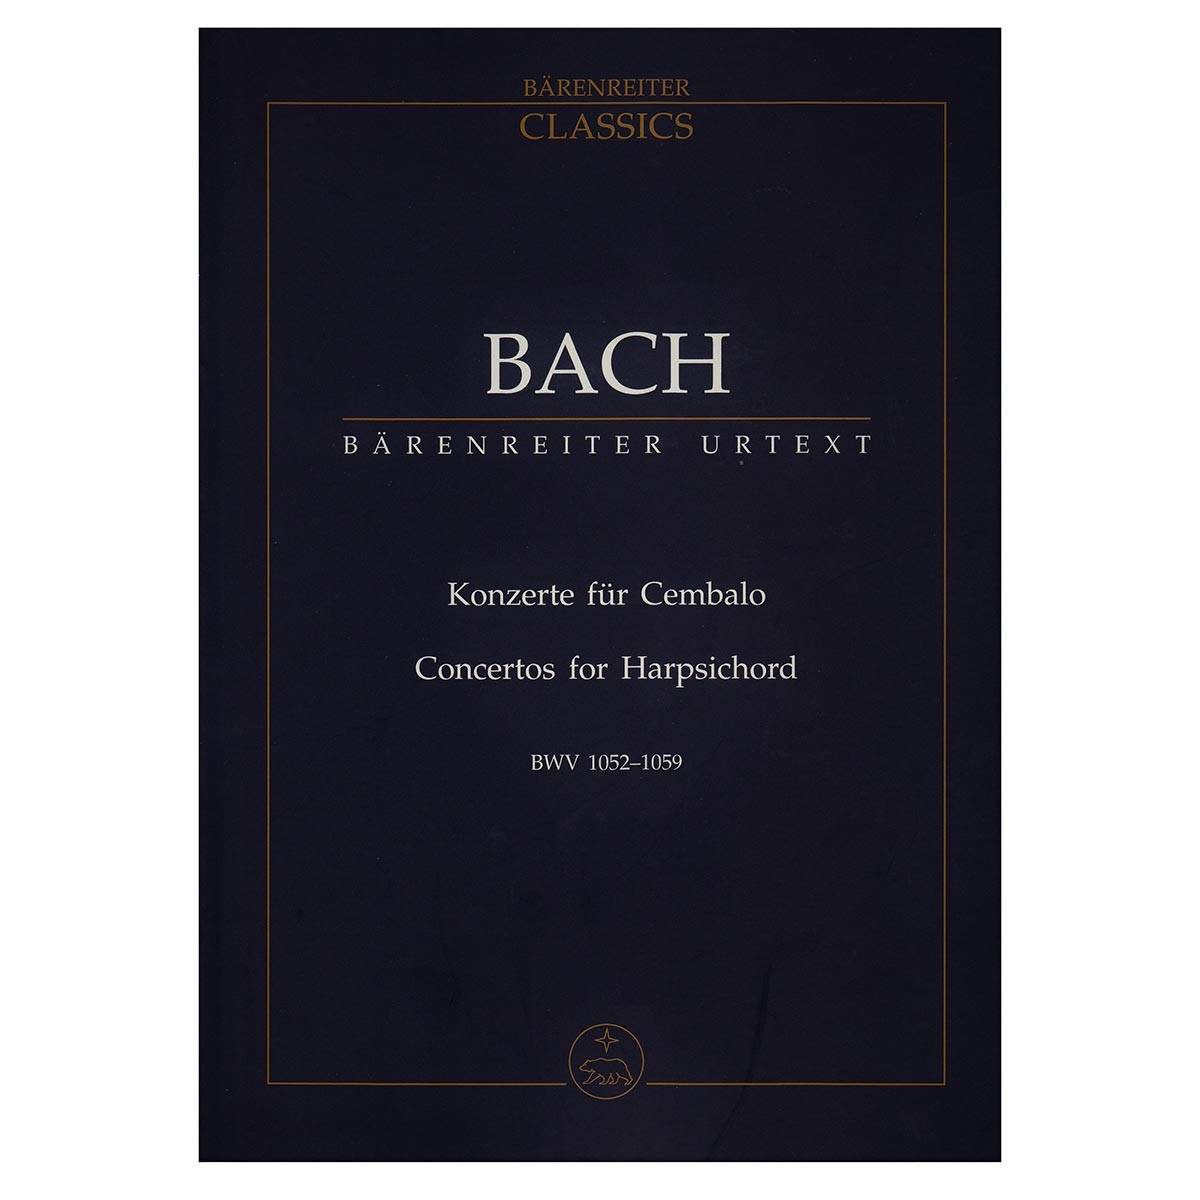 J. S. Bach - Concertos for Harpsichord BWV 1052-1059